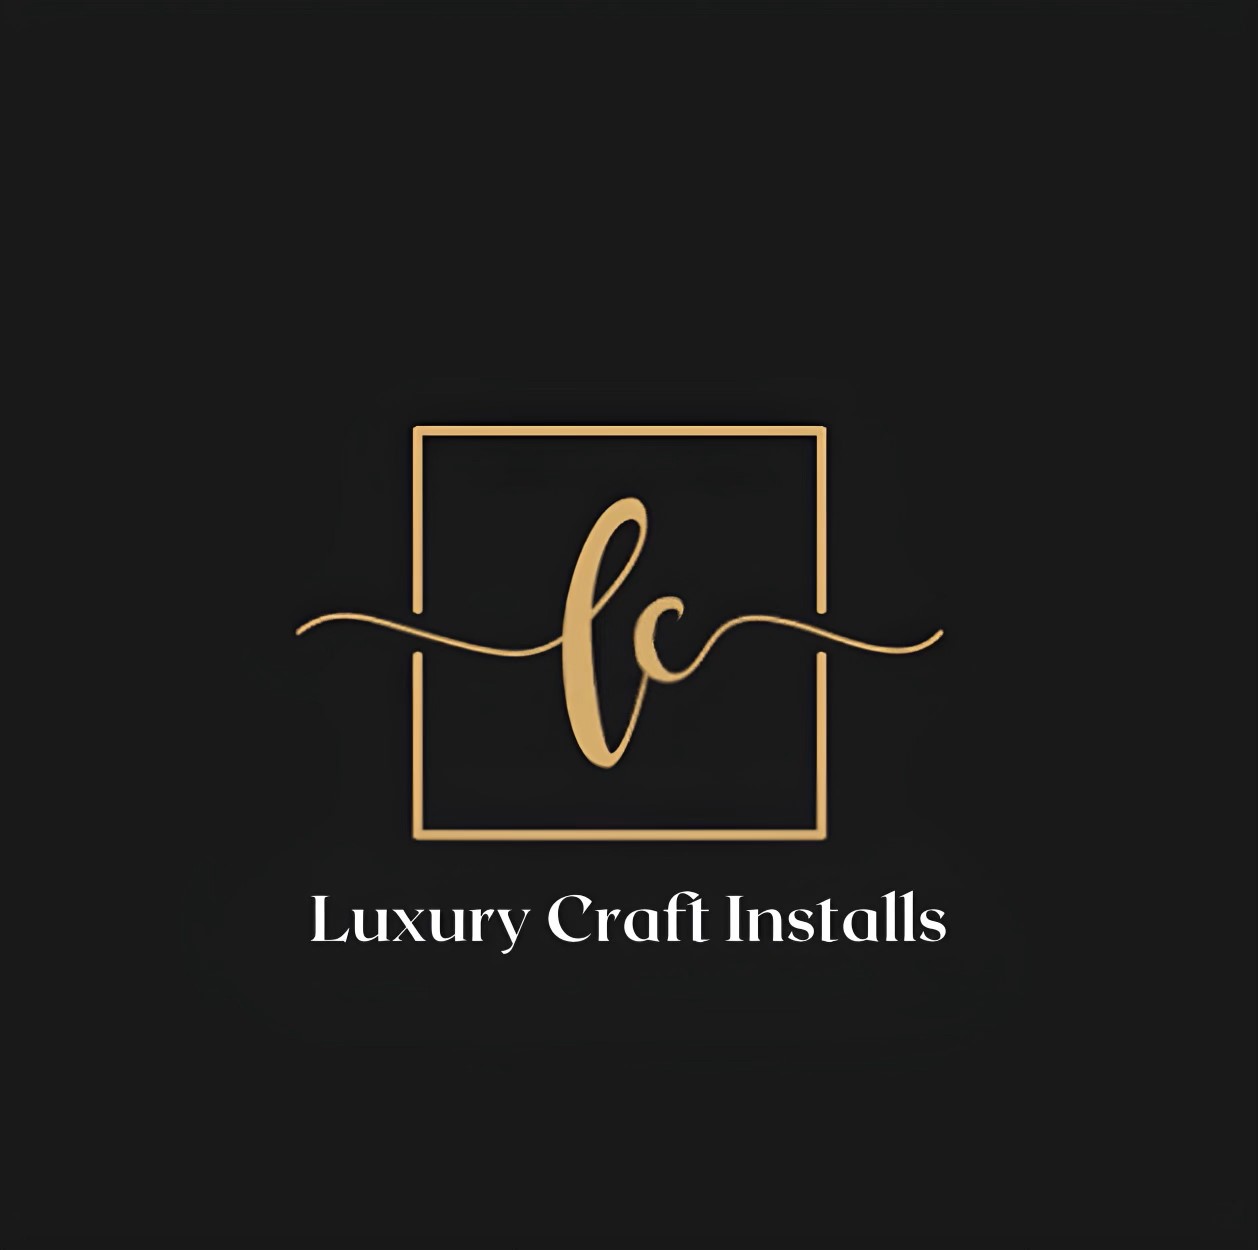 Luxury Craft Installs